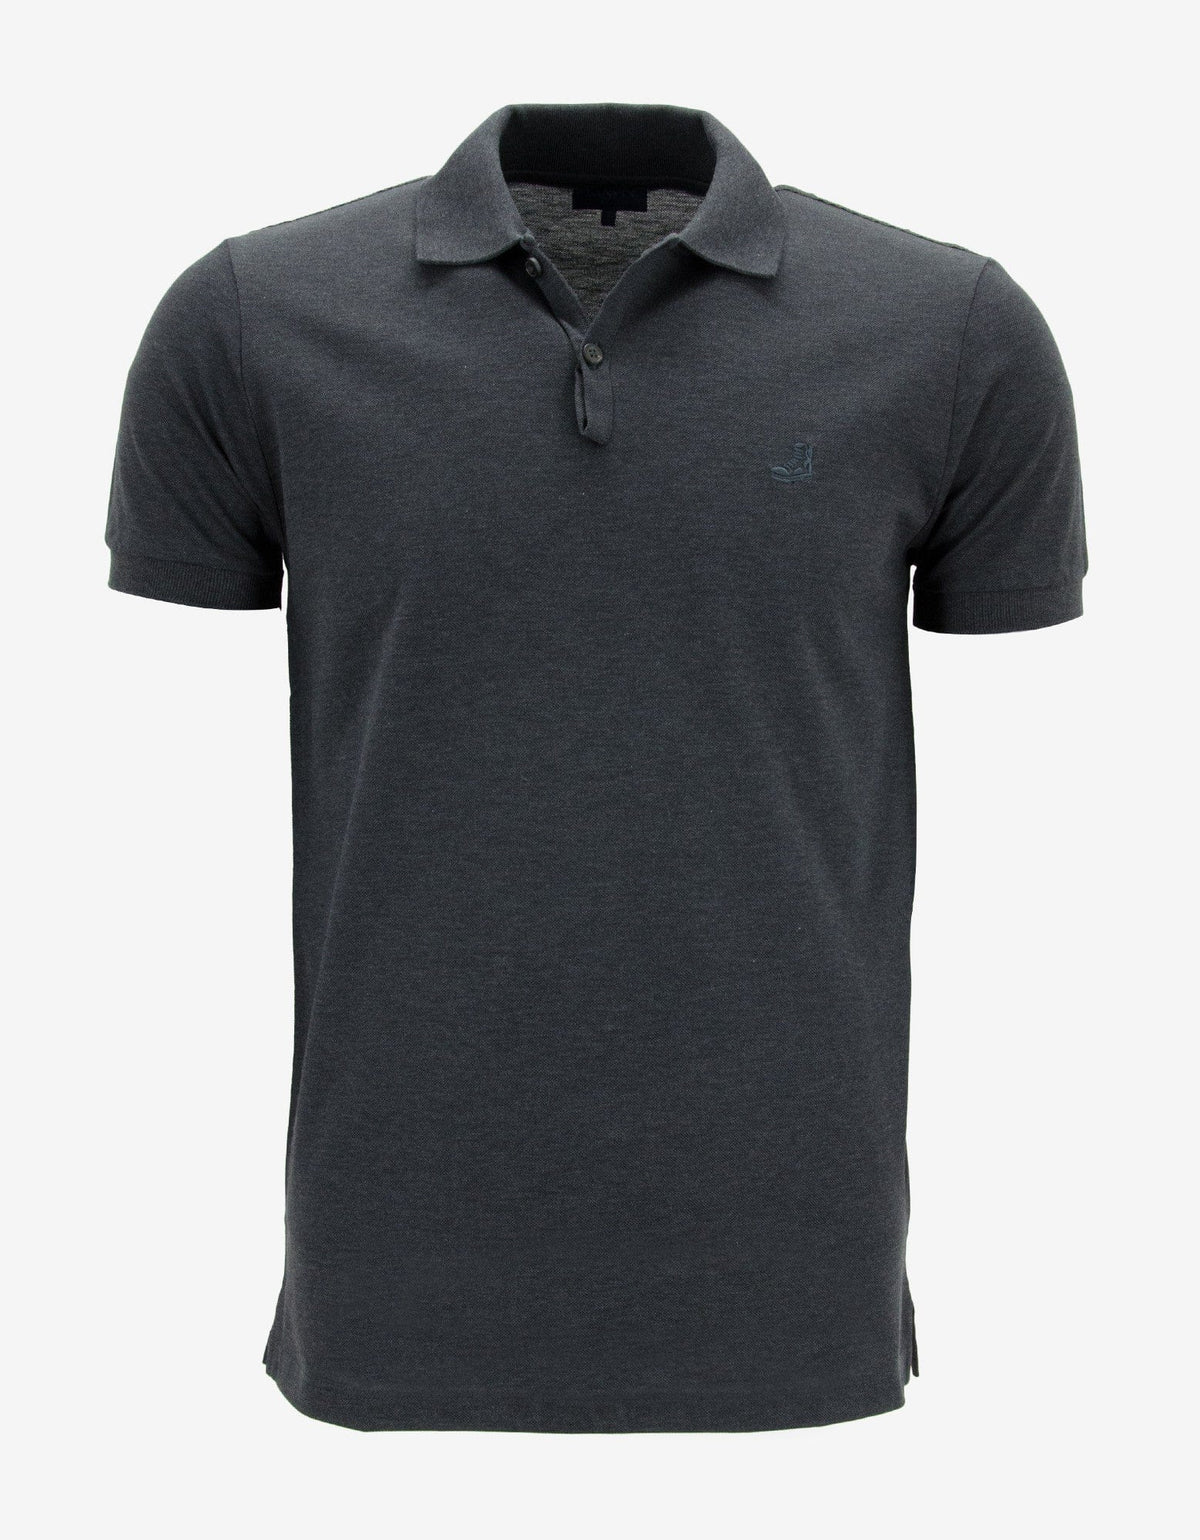 Lanvin Dark Grey Polo T-Shirt with Trainer Emblem